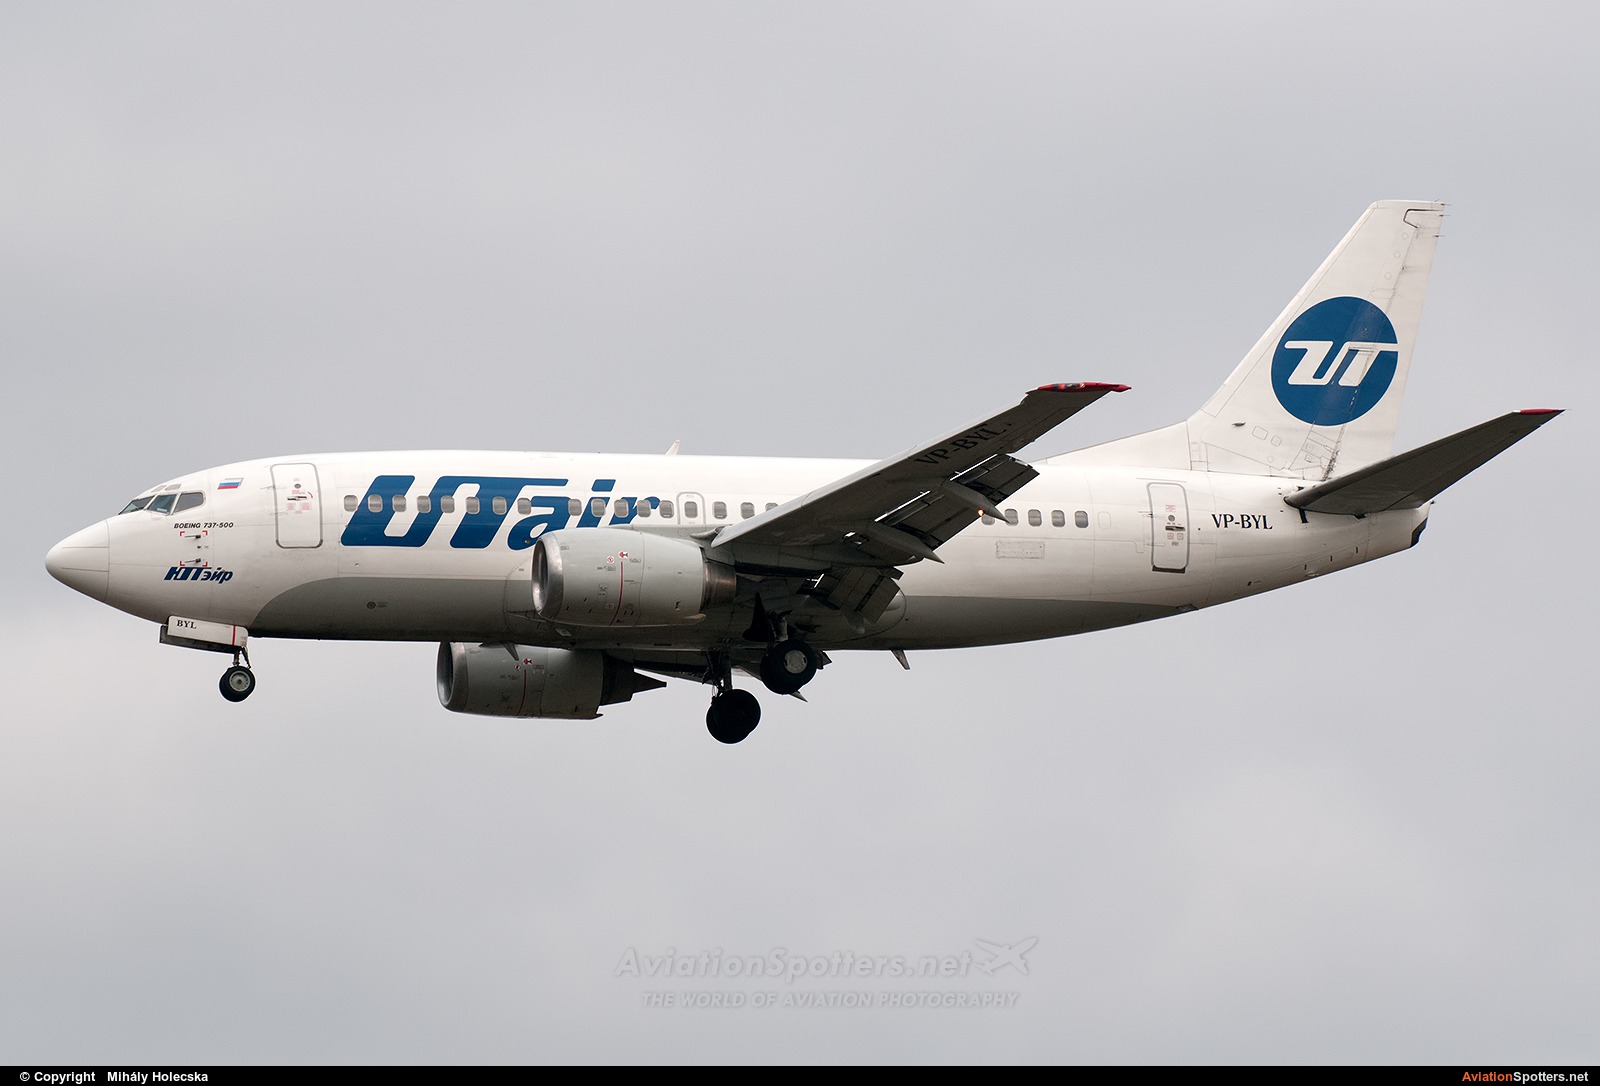 UTair  -  737-500  (VP-BYL) By Mihály Holecska (Misixx)